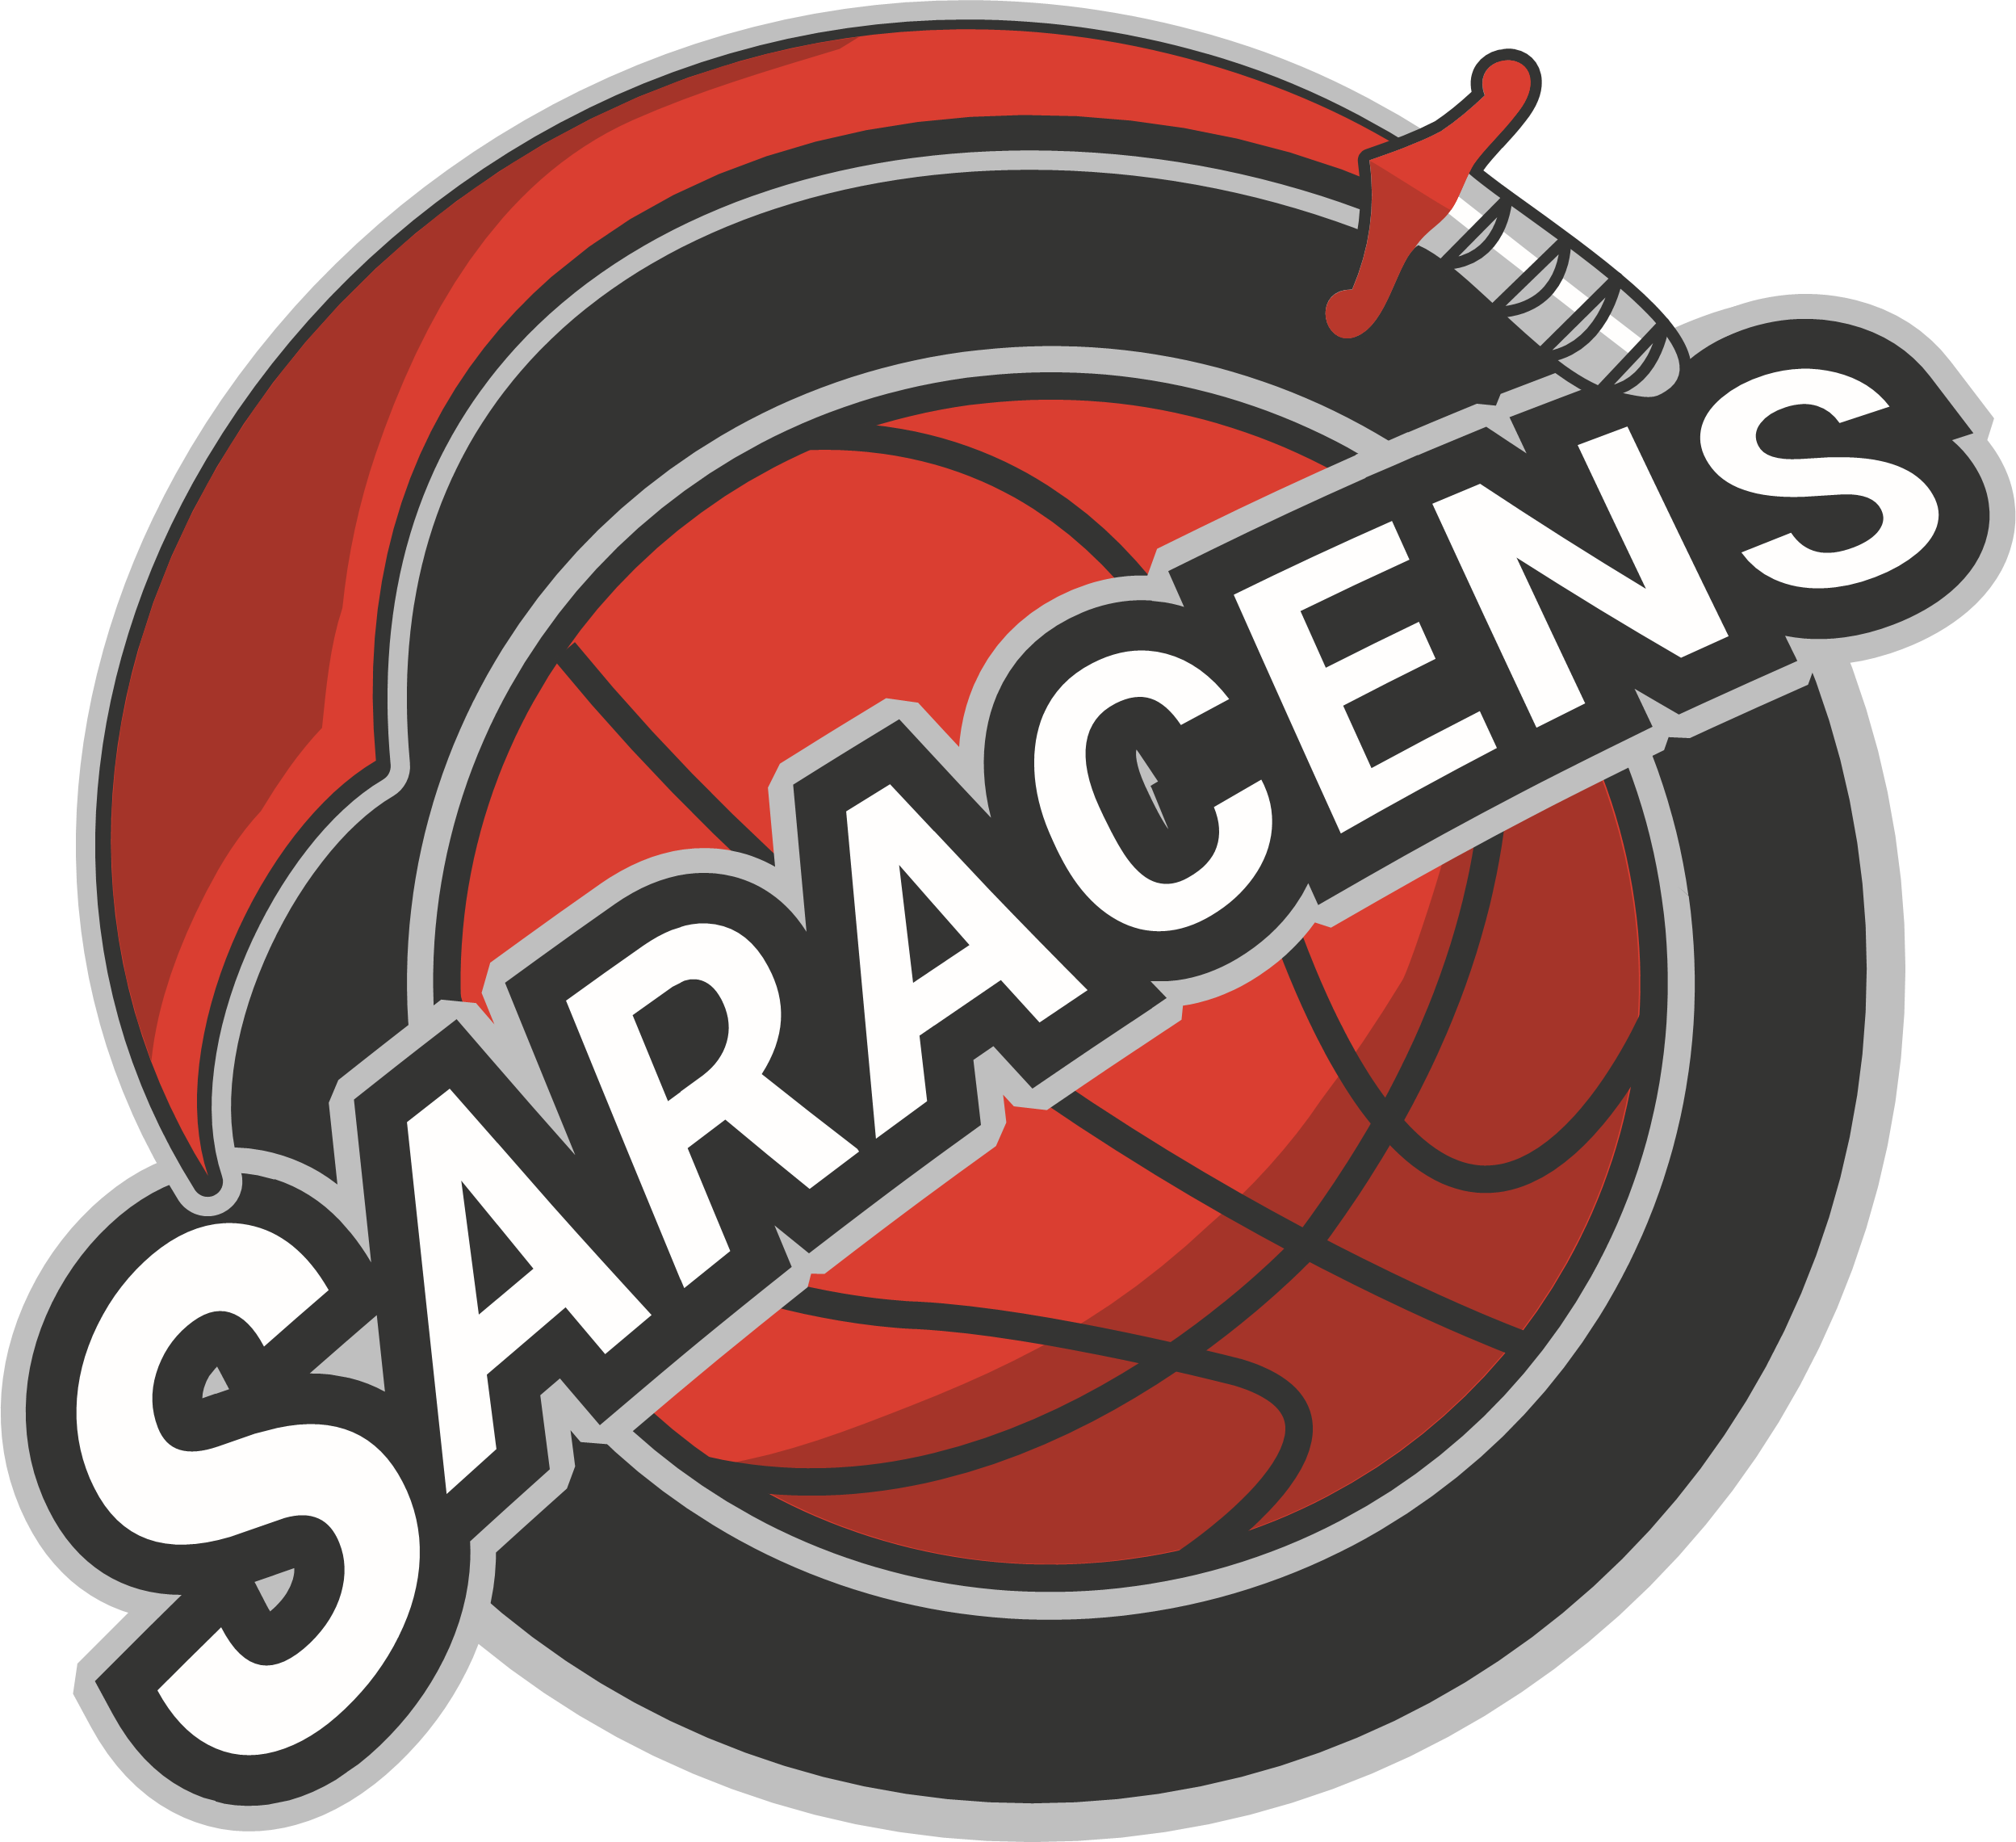 Cornwall Saracens Basketball